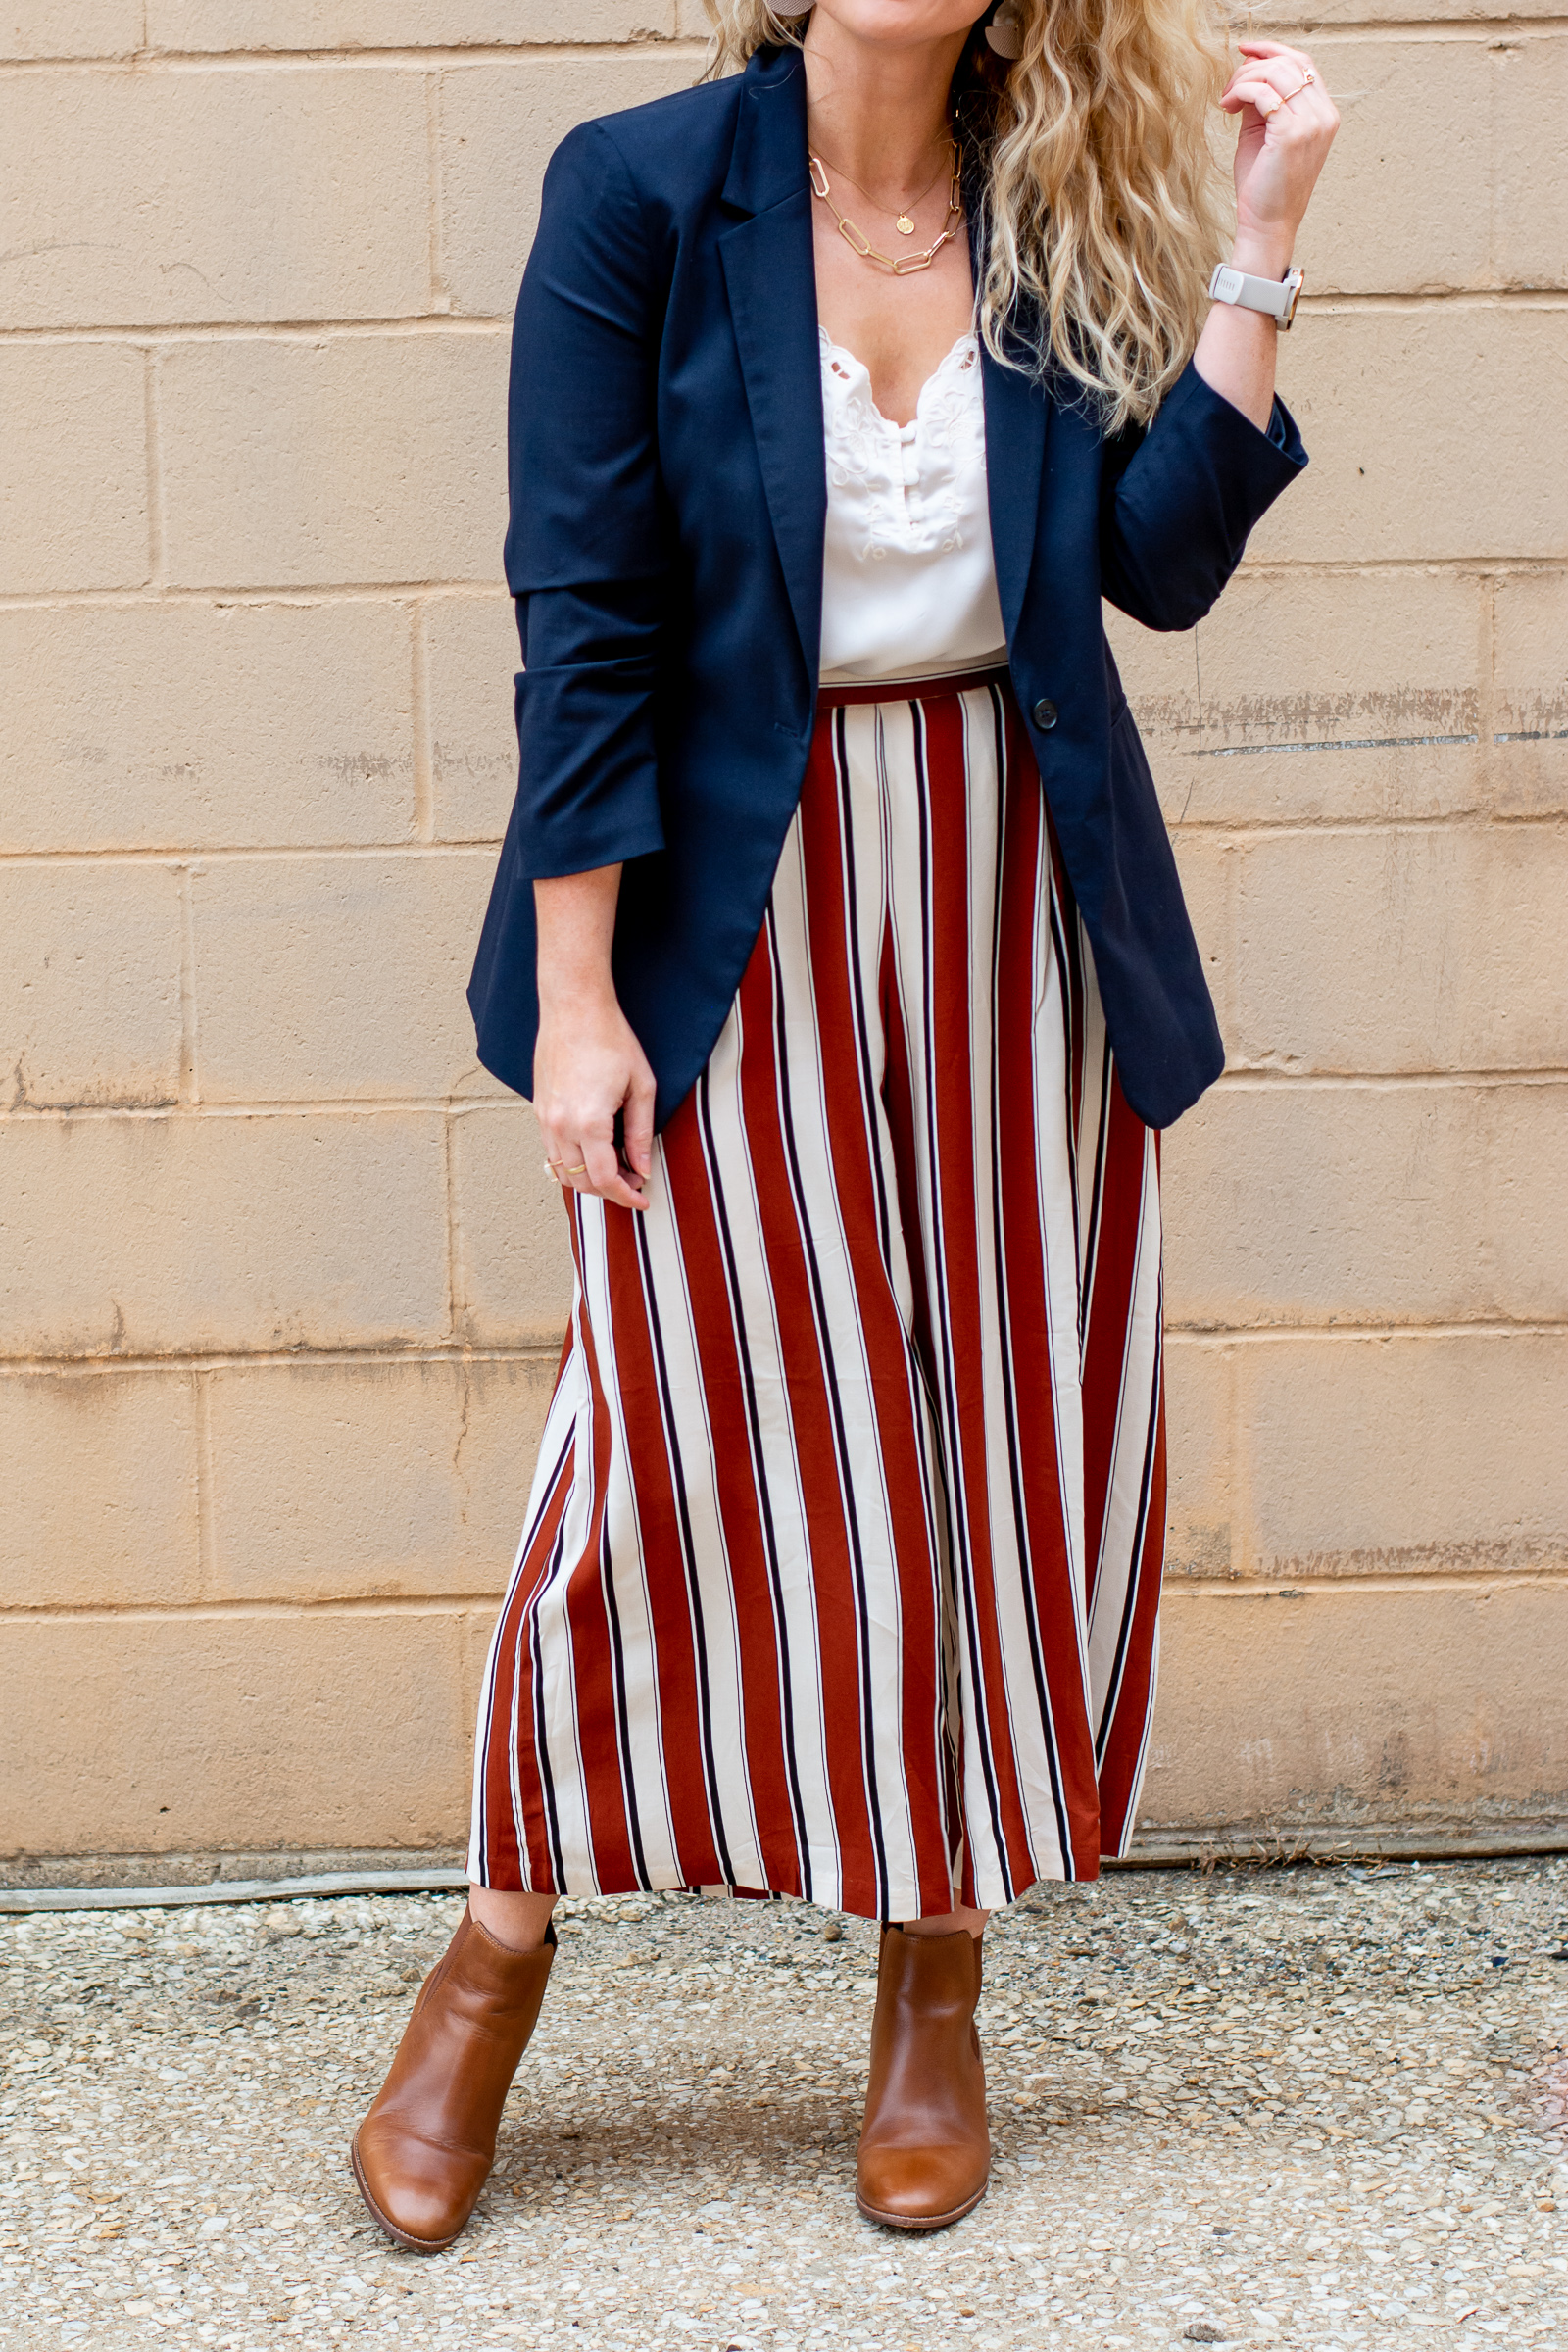 Fall #OOTD: Striped Pants + Navy Blazer. | LSR